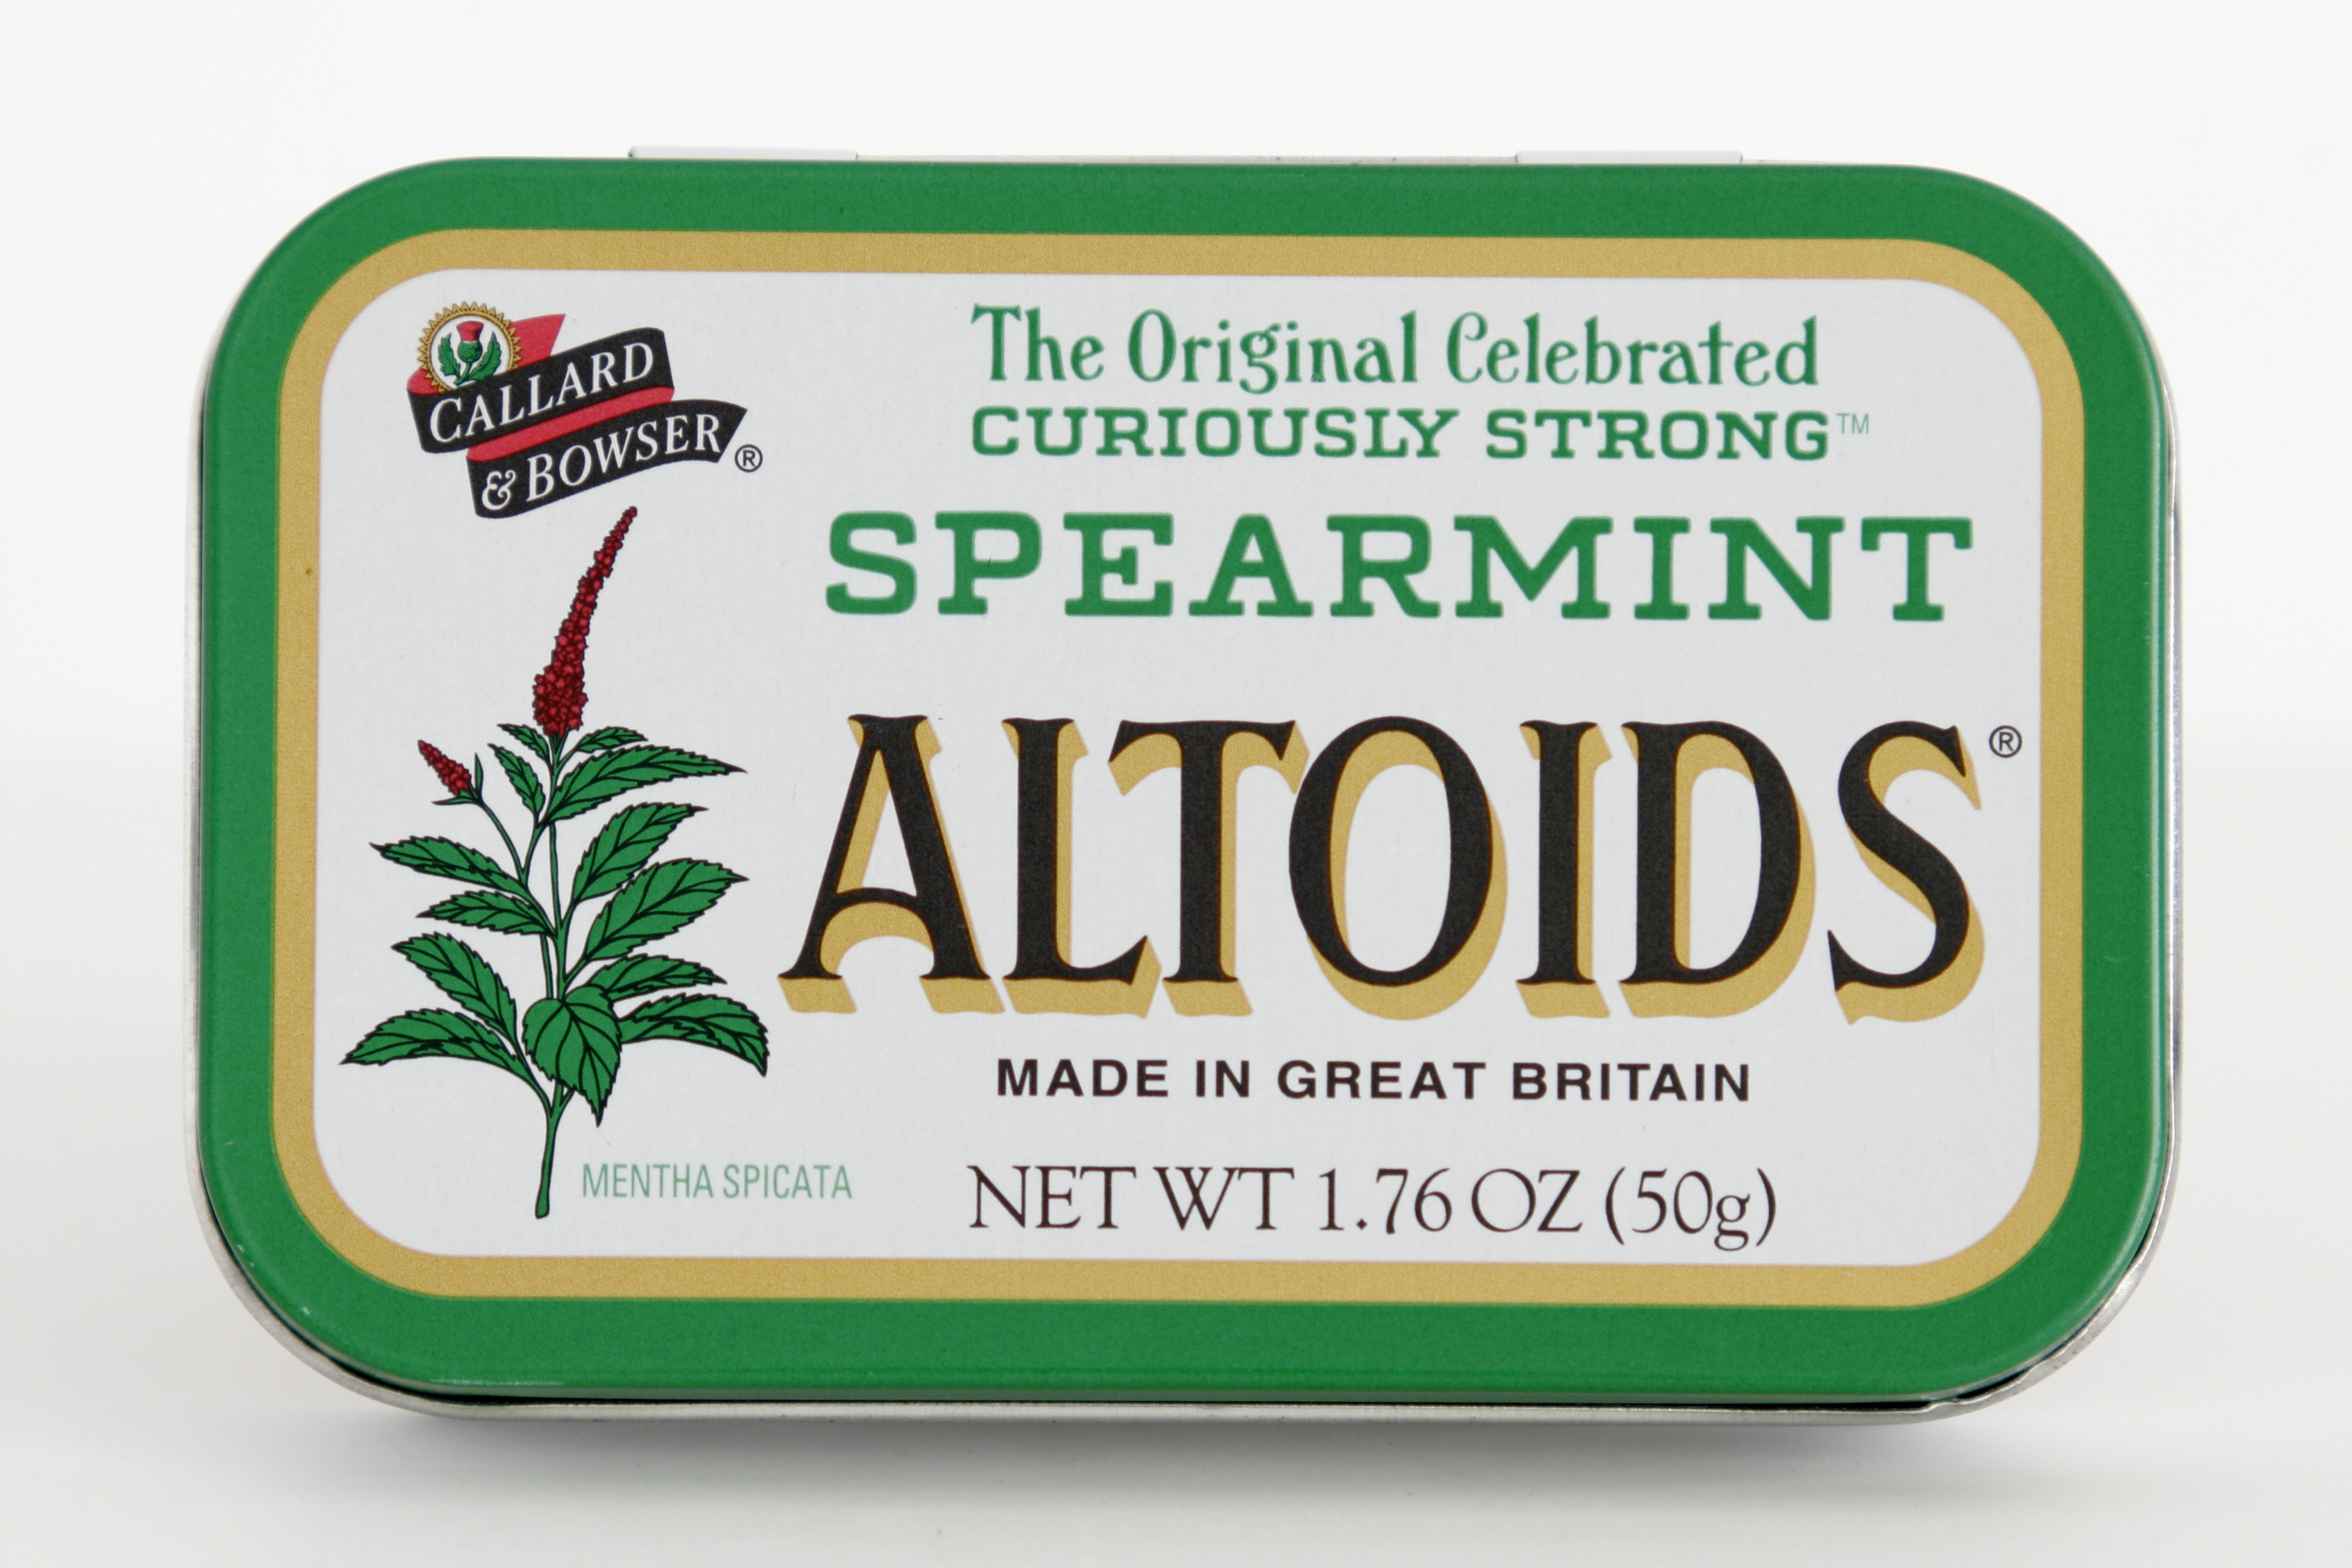 Tin can of spearmint Altoids